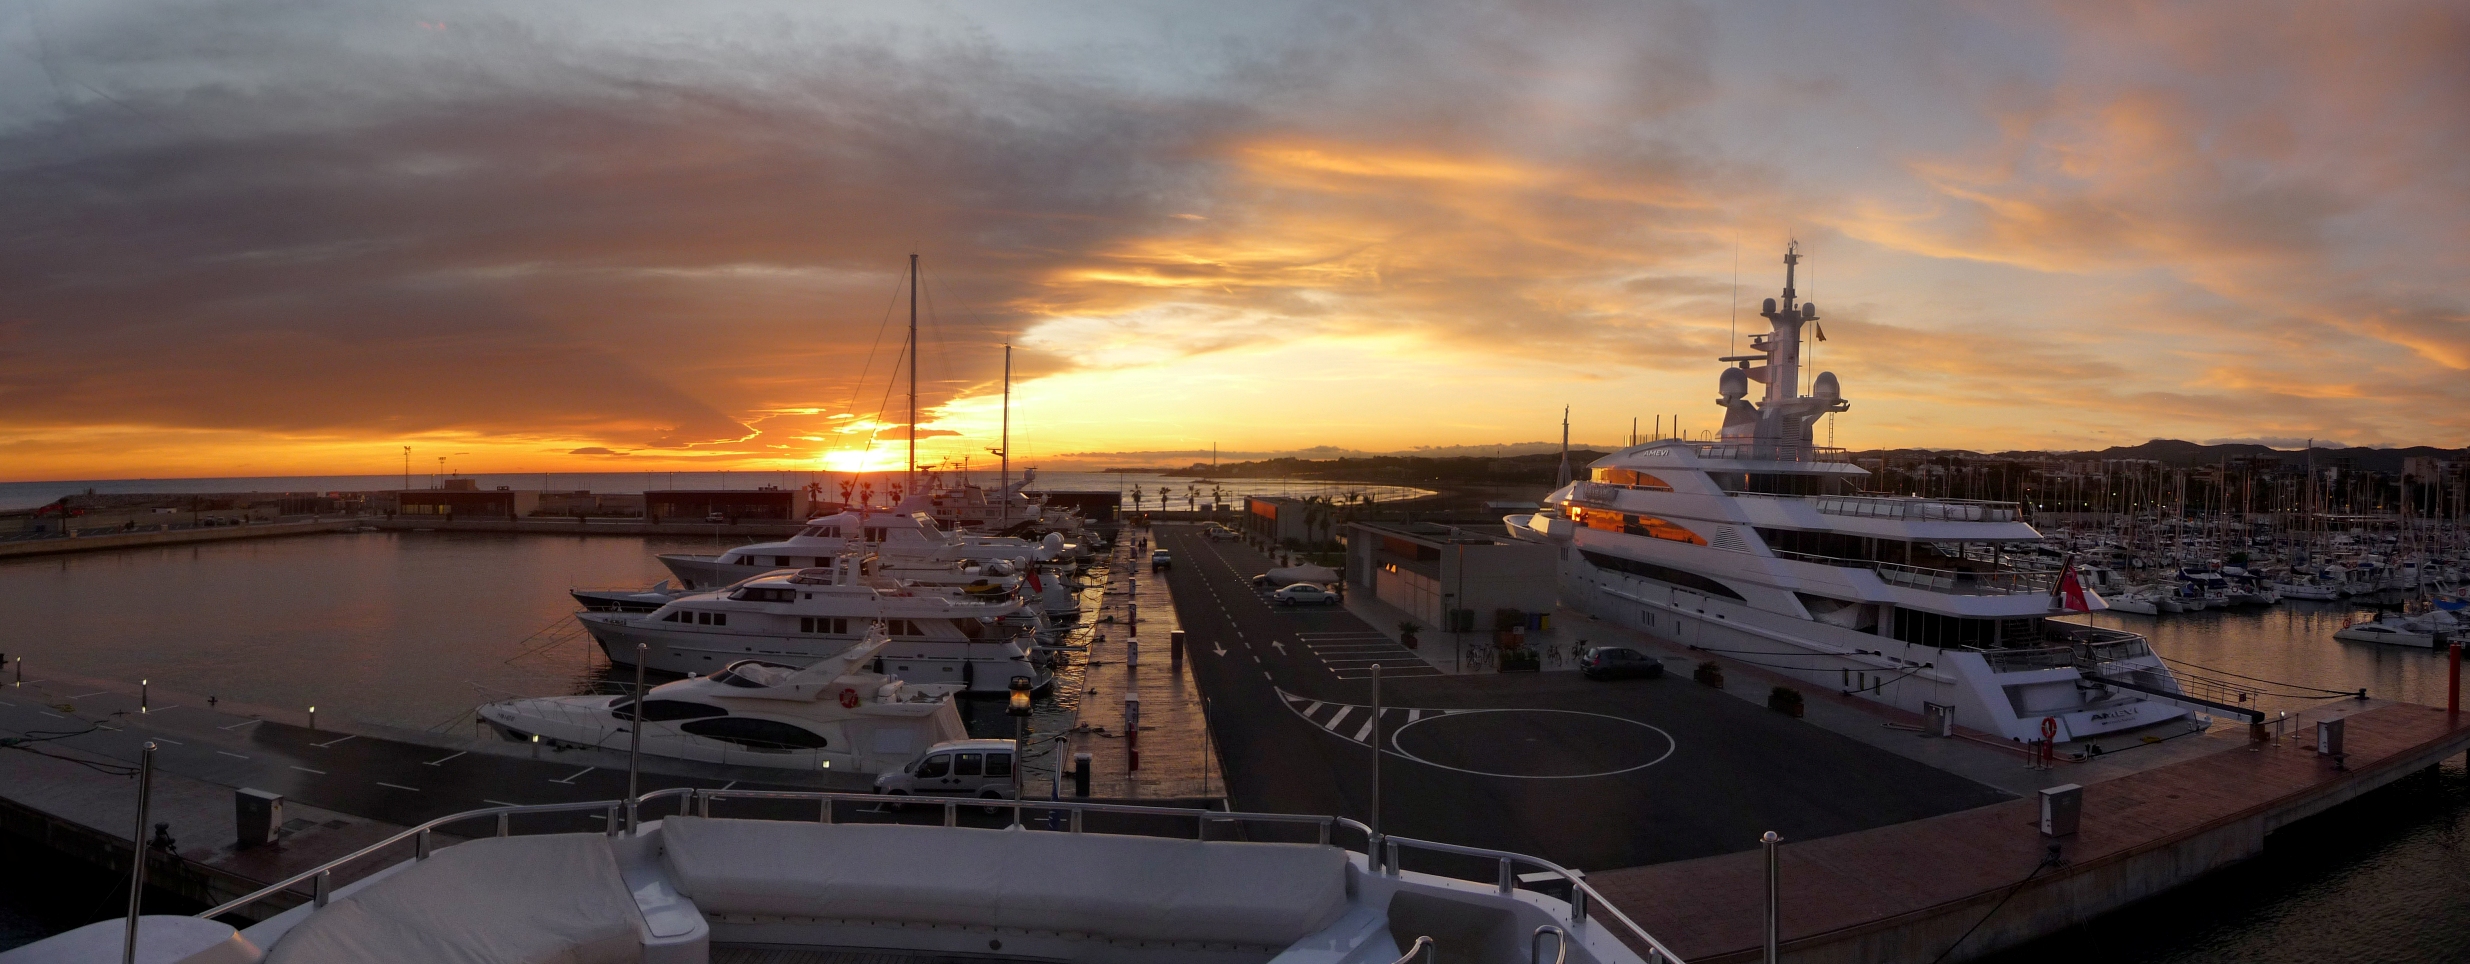 Image for article Vilanova Grand Marina and BWA Yachting collaborate